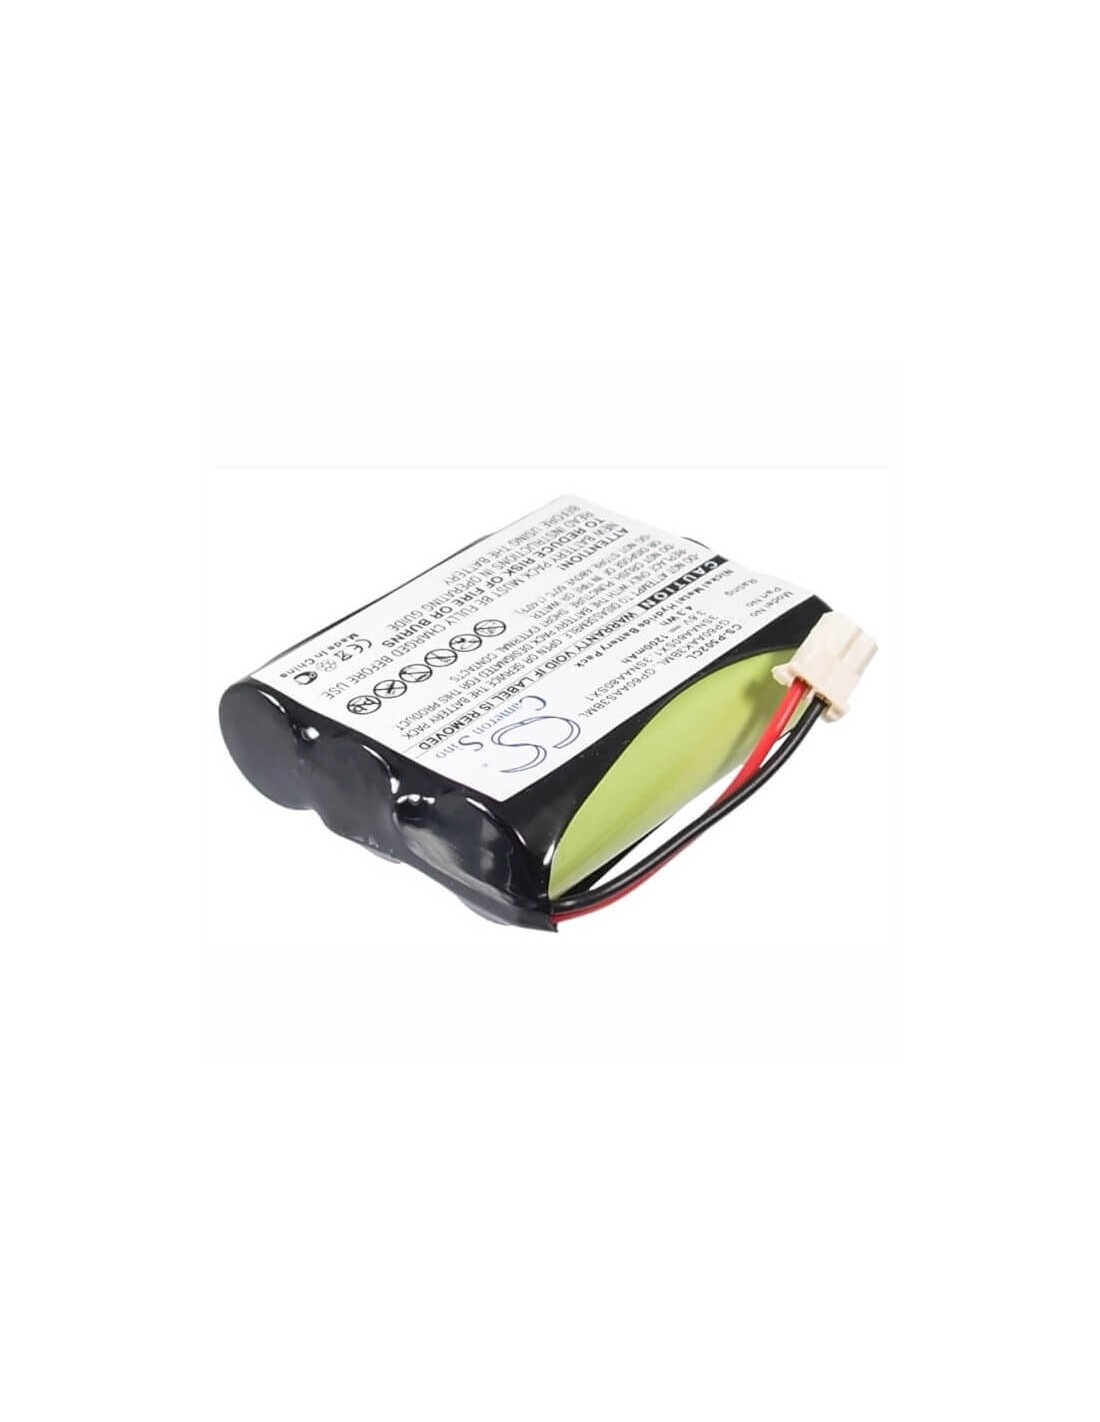 Battery for Audiovox, Bt2400, Gx2400, Gx2401c, Gx2411ci, 3.6V, 1200mAh - 4.32Wh